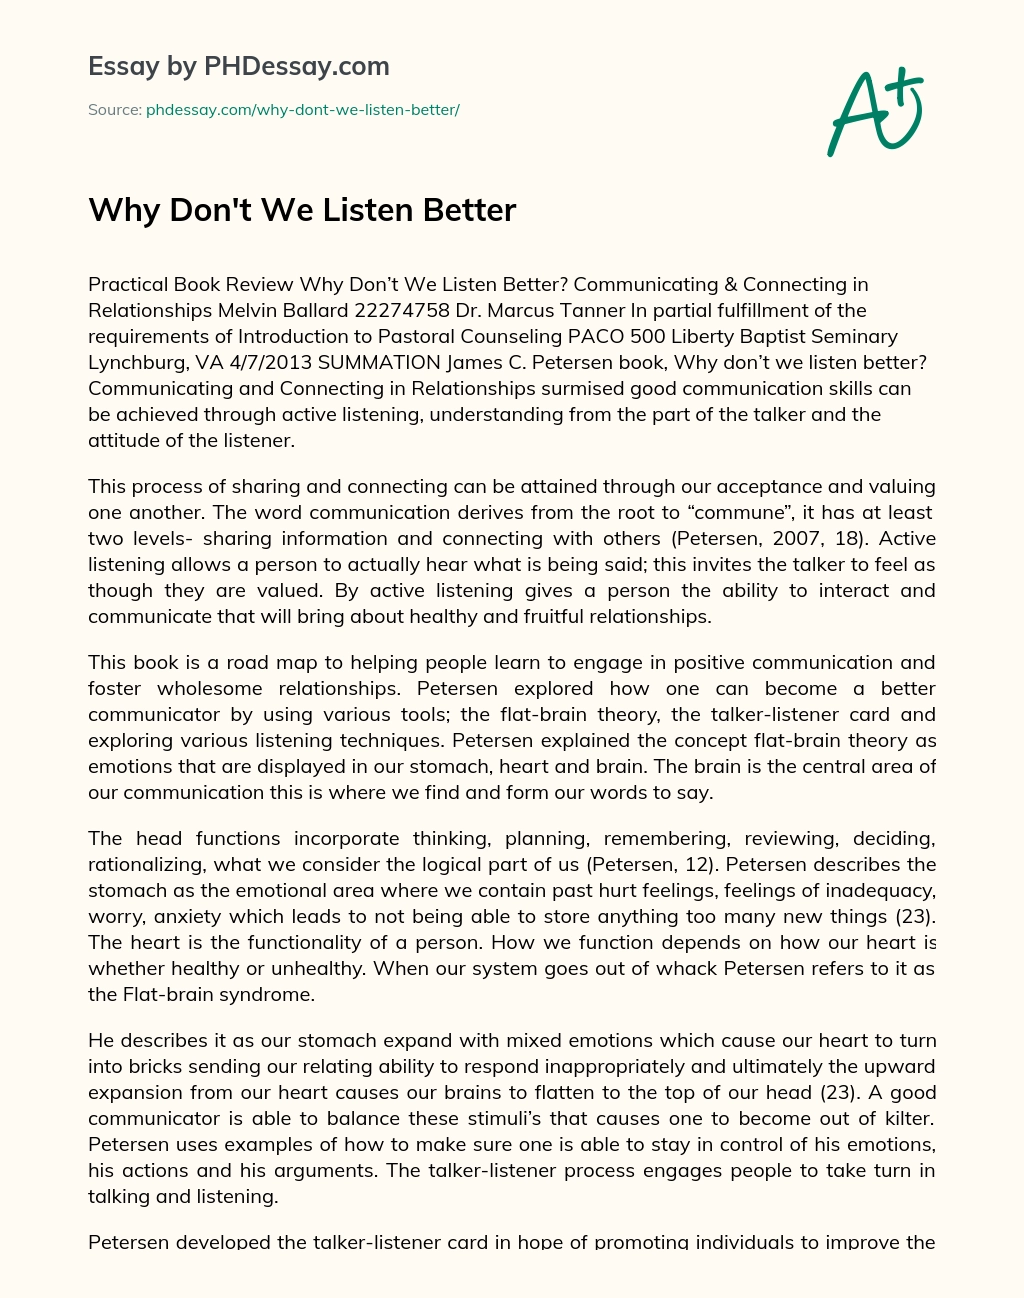 Why Don’t We Listen Better essay